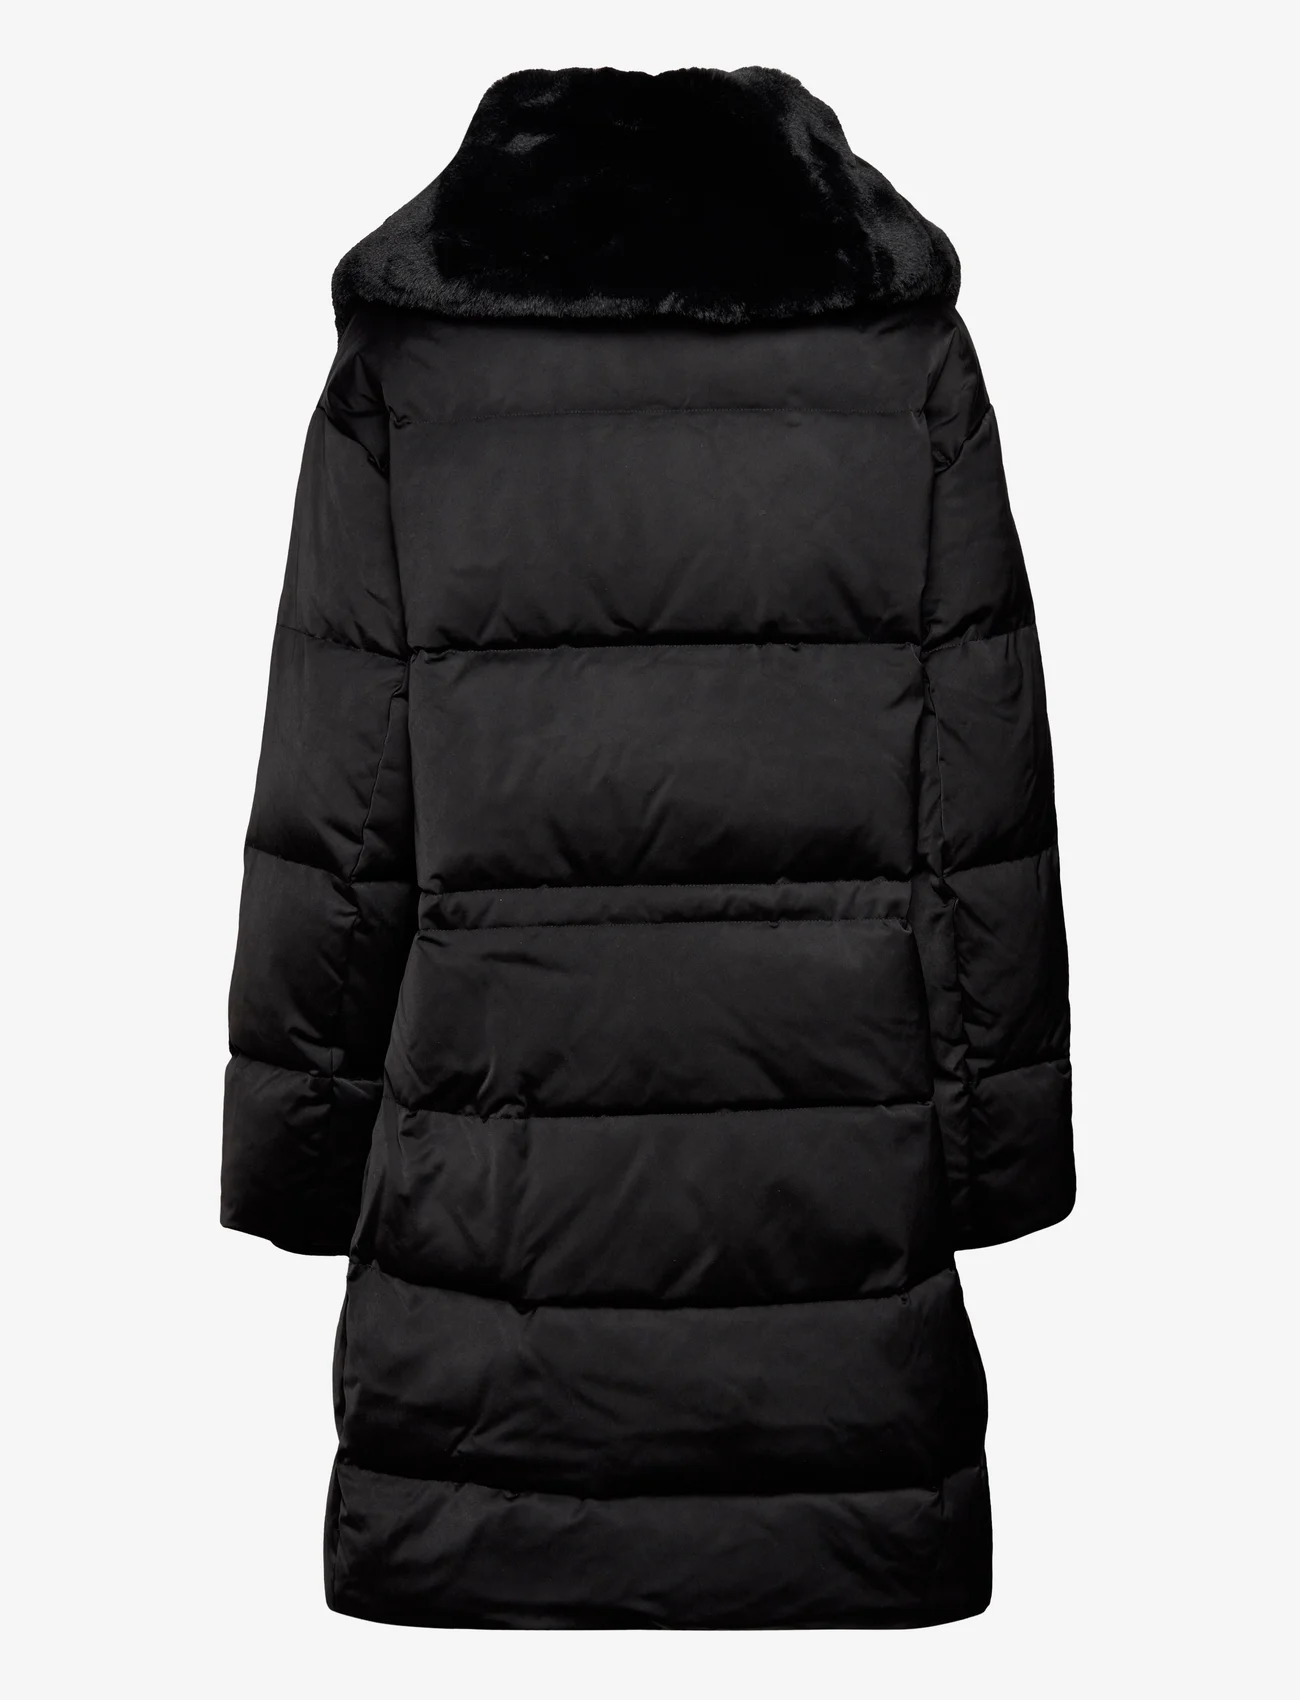 Calvin Klein - LUX SATIN PUFFER COAT - vinterjackor - ck black - 1